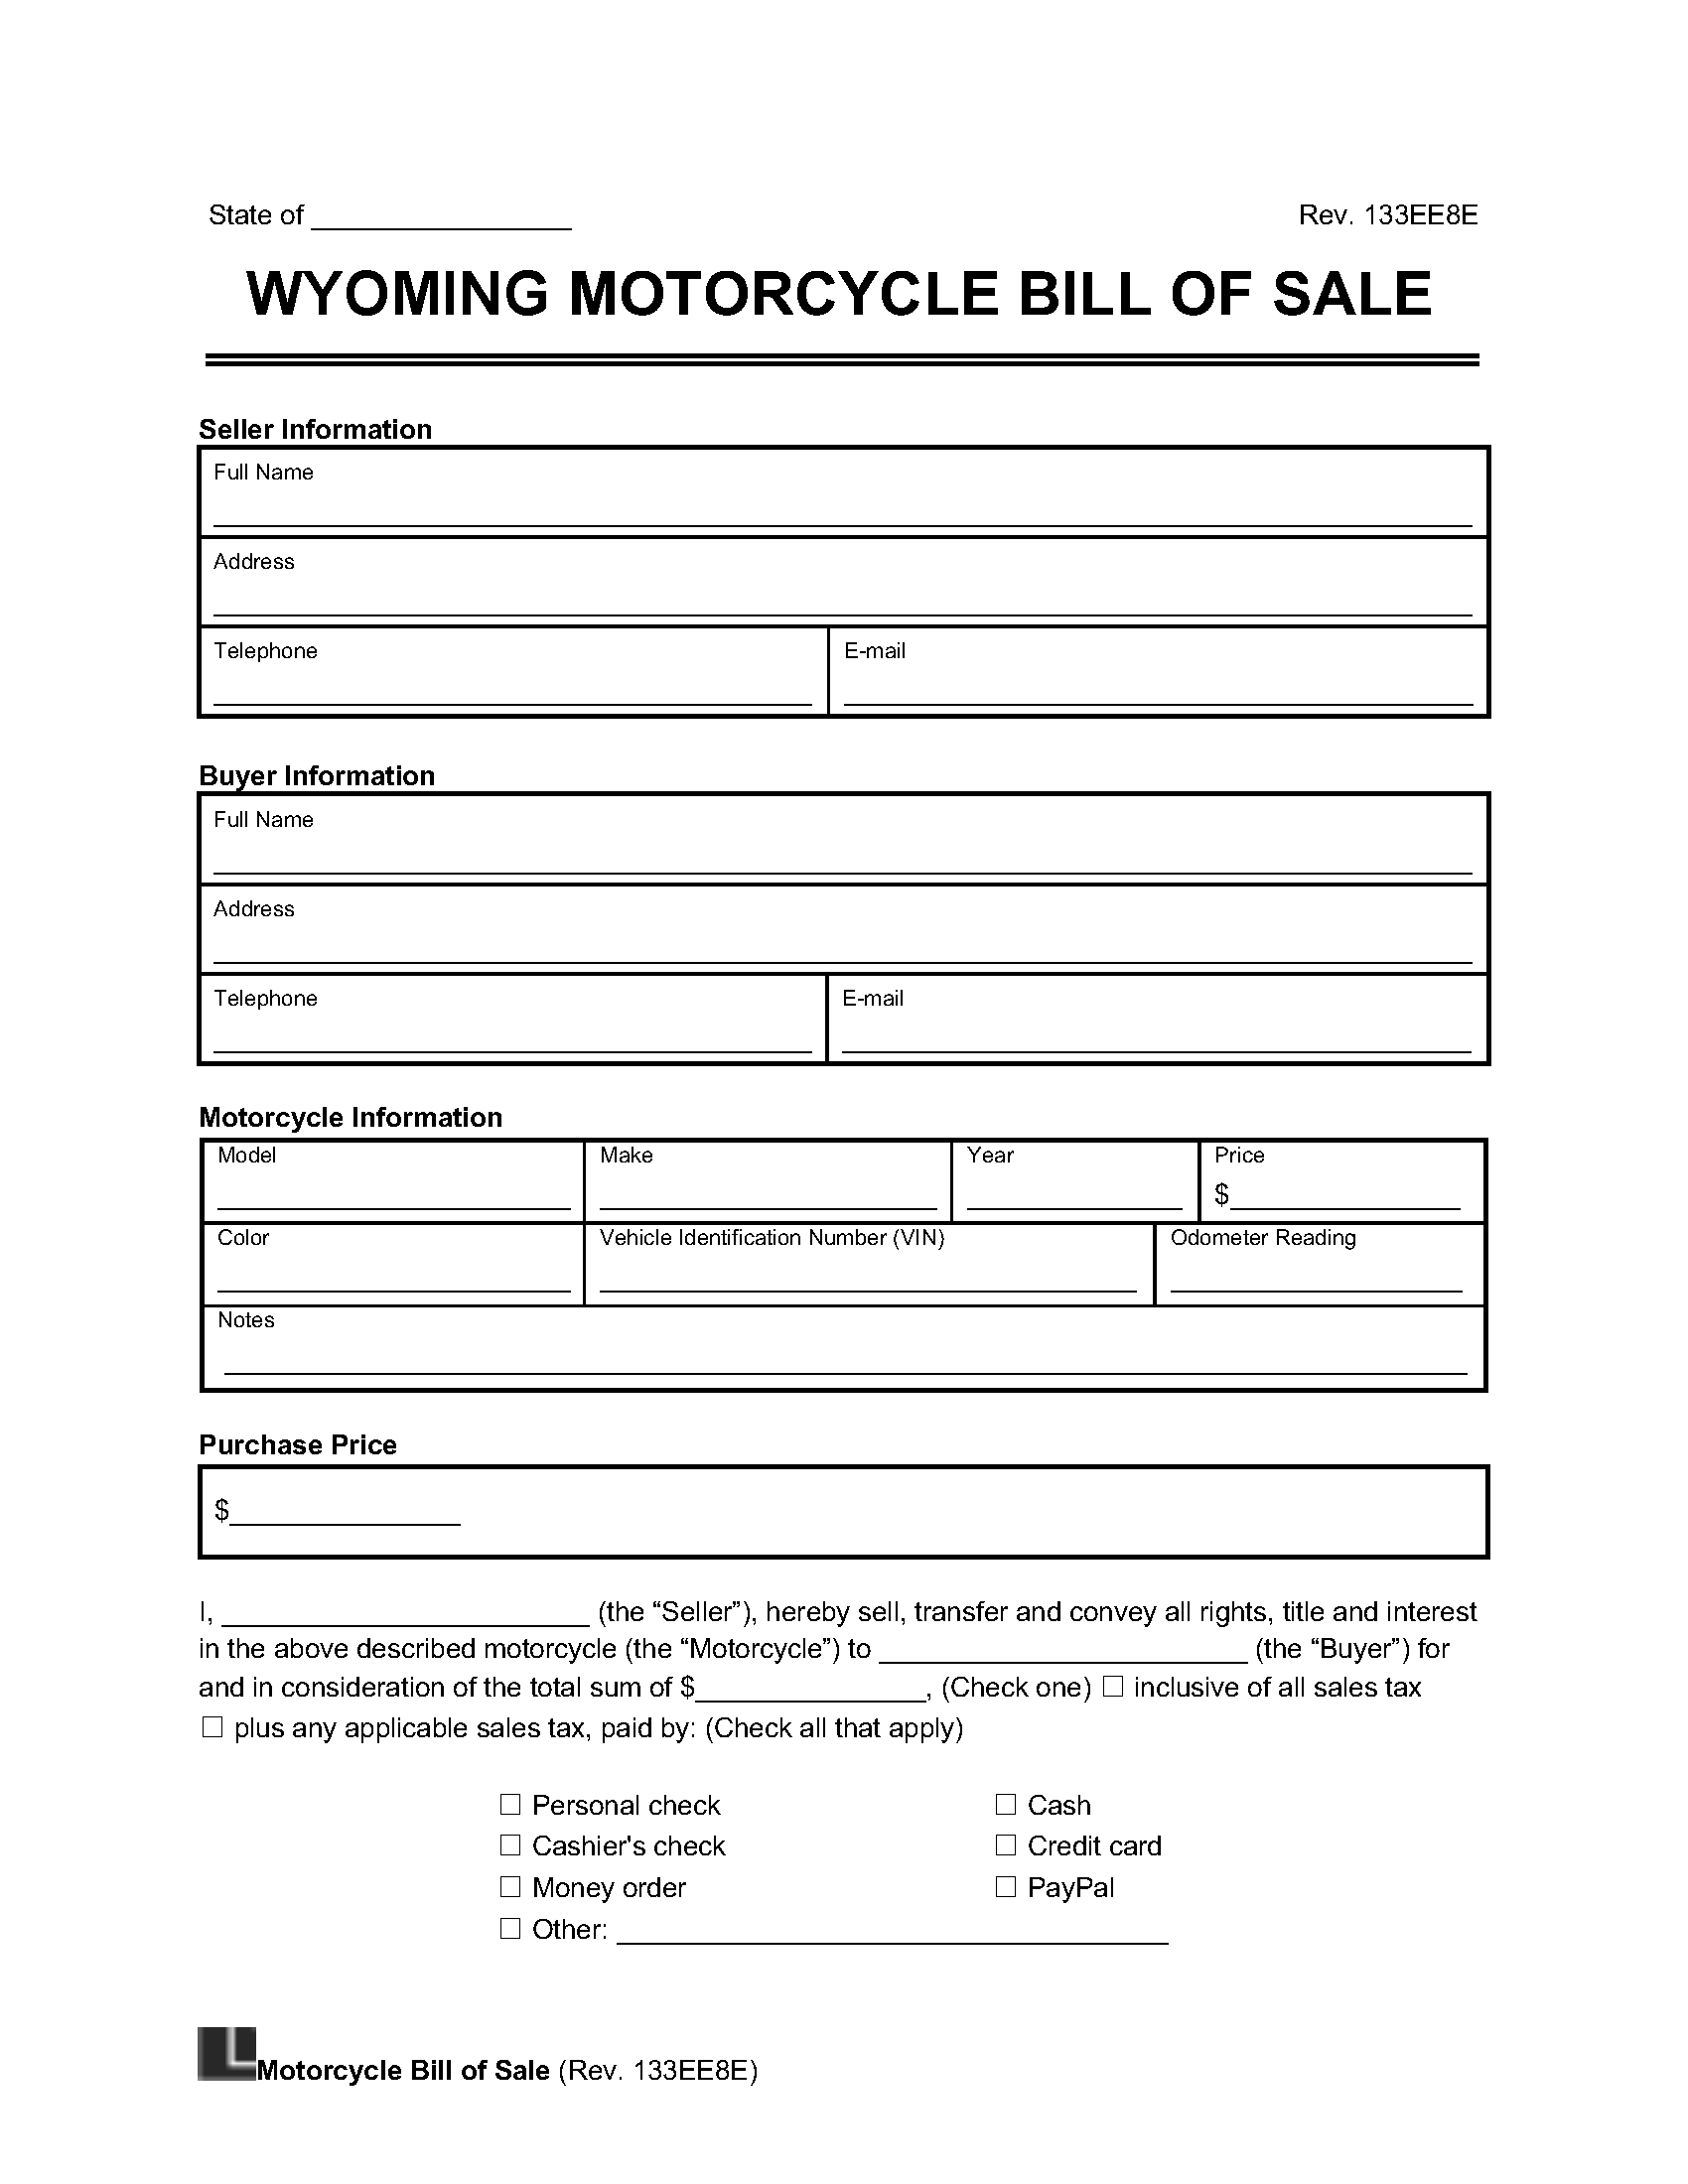 wyoming motorcycle bill of sale